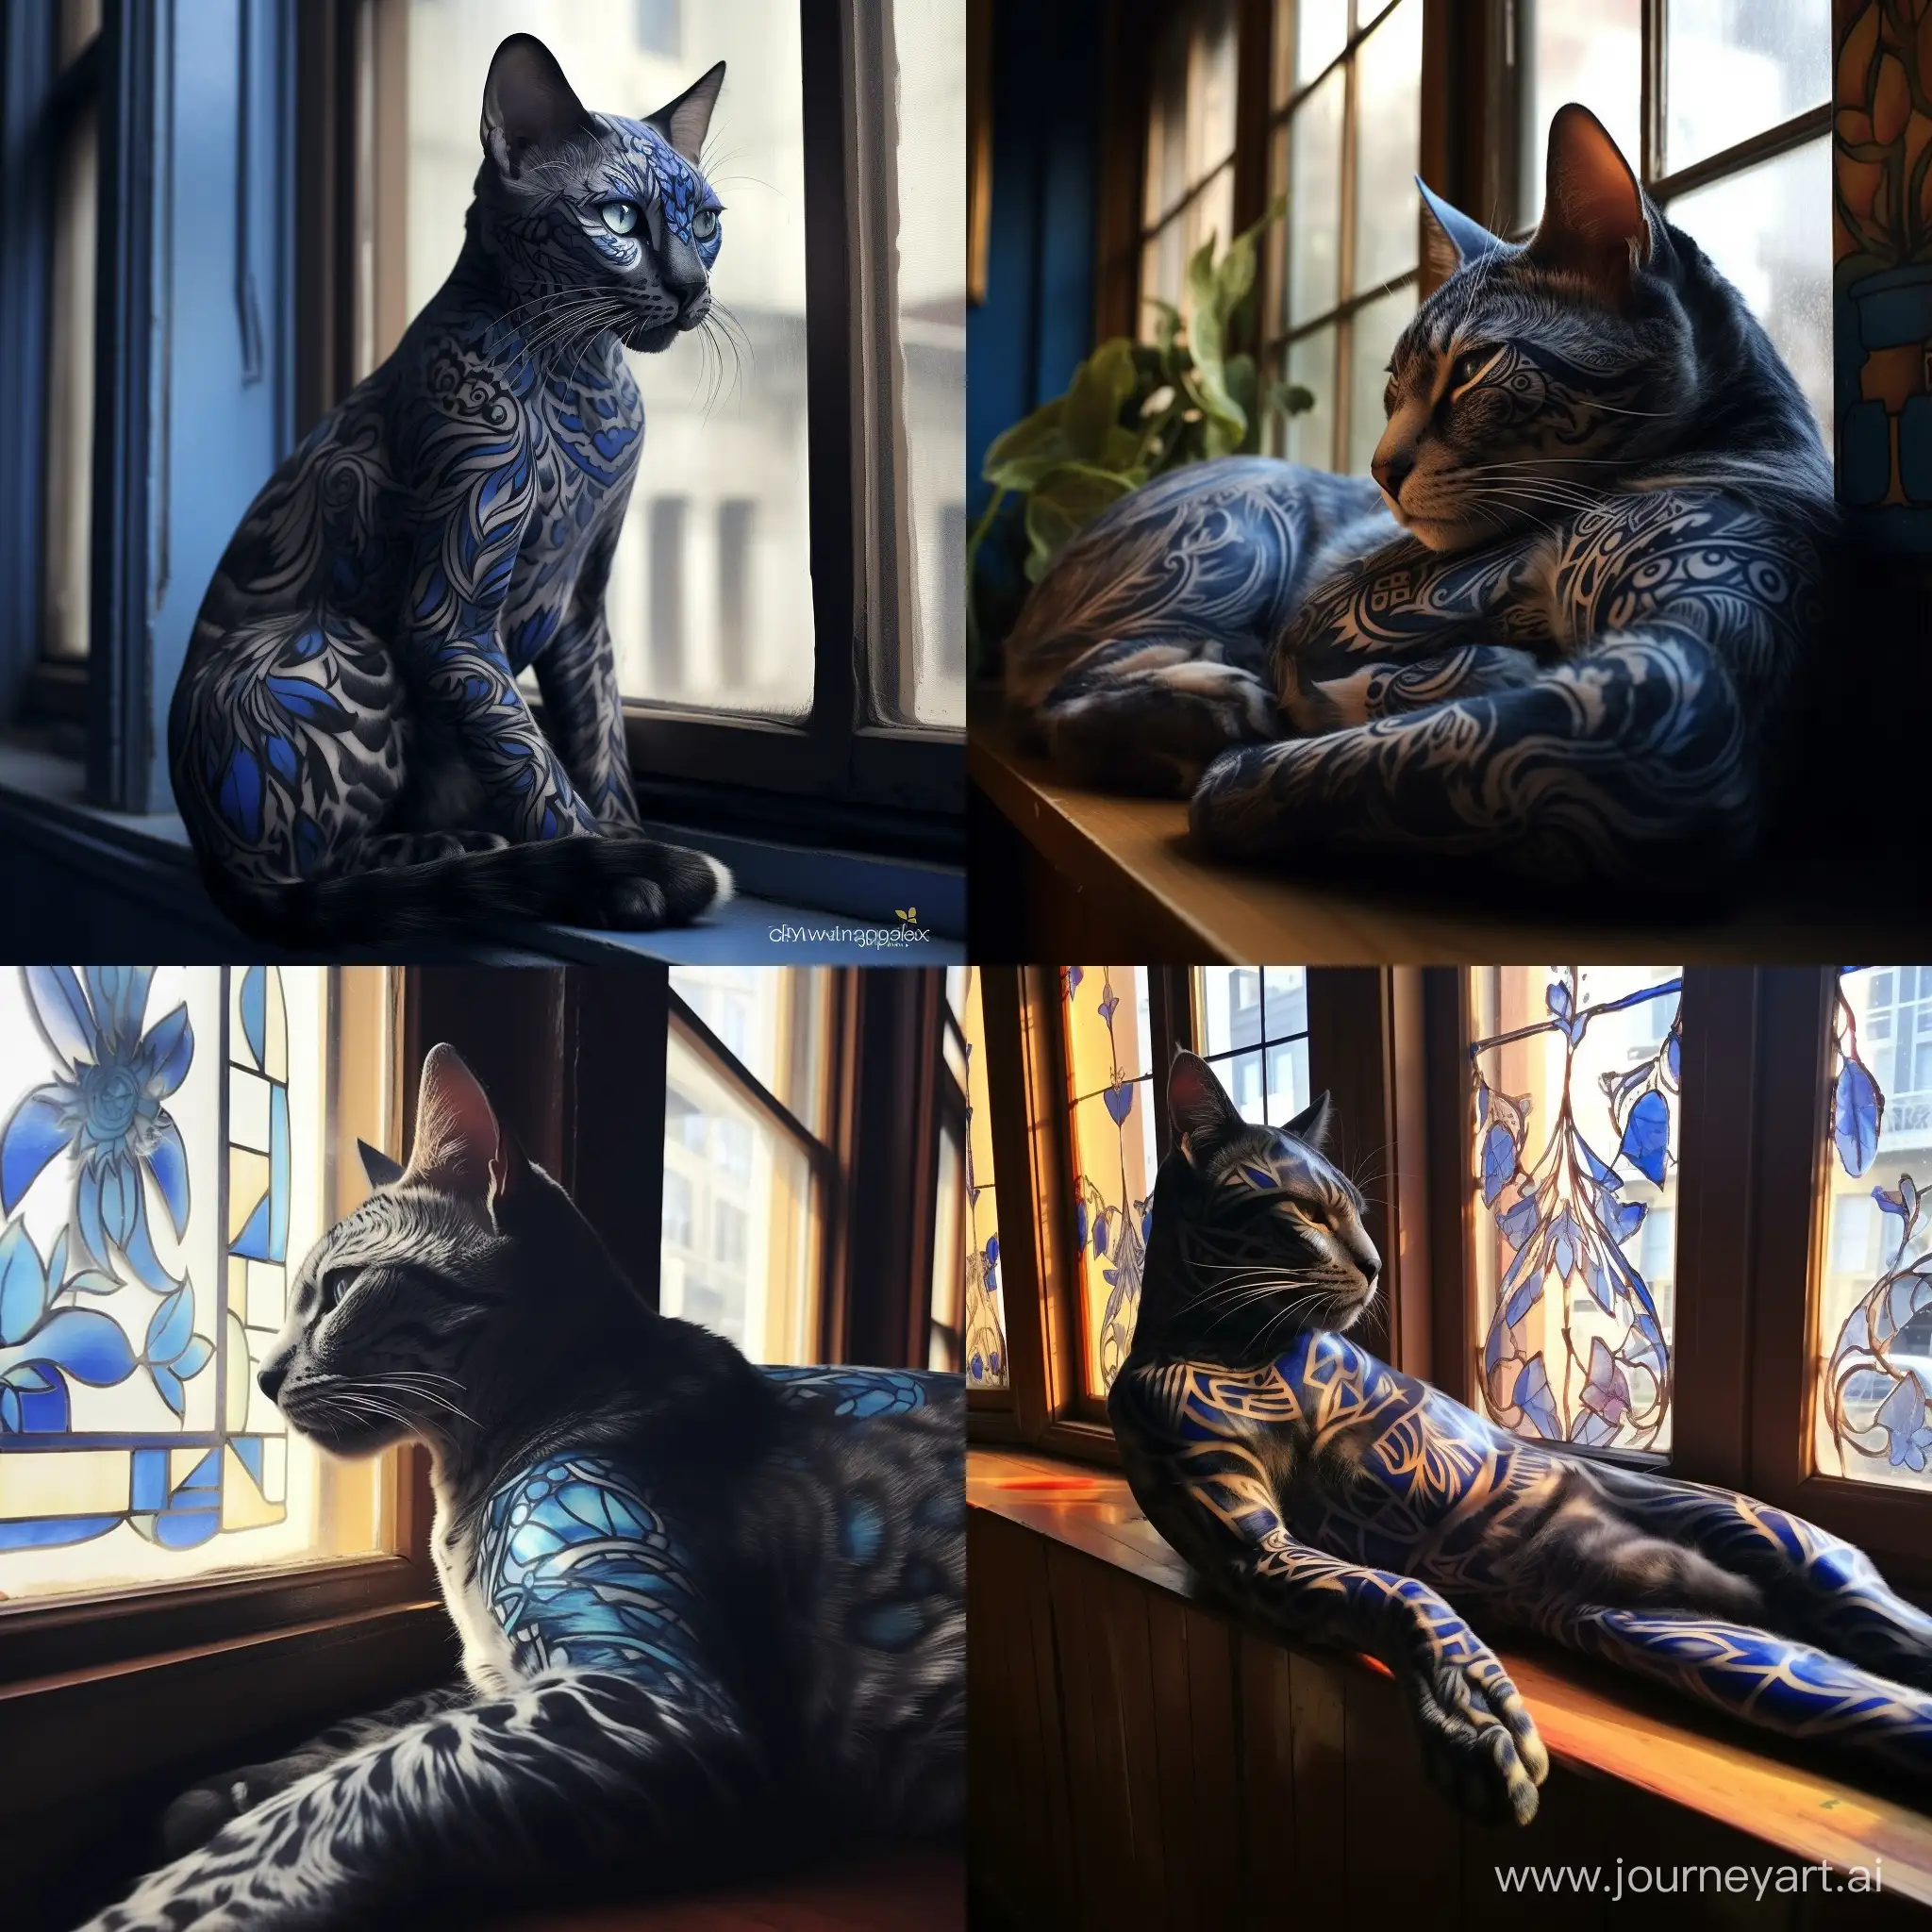 Tattoo. голубая кошка с черными узорами лениво разлеглась на фоне окна, мягкий свет проникает через окна отбрасывая блики на кошку